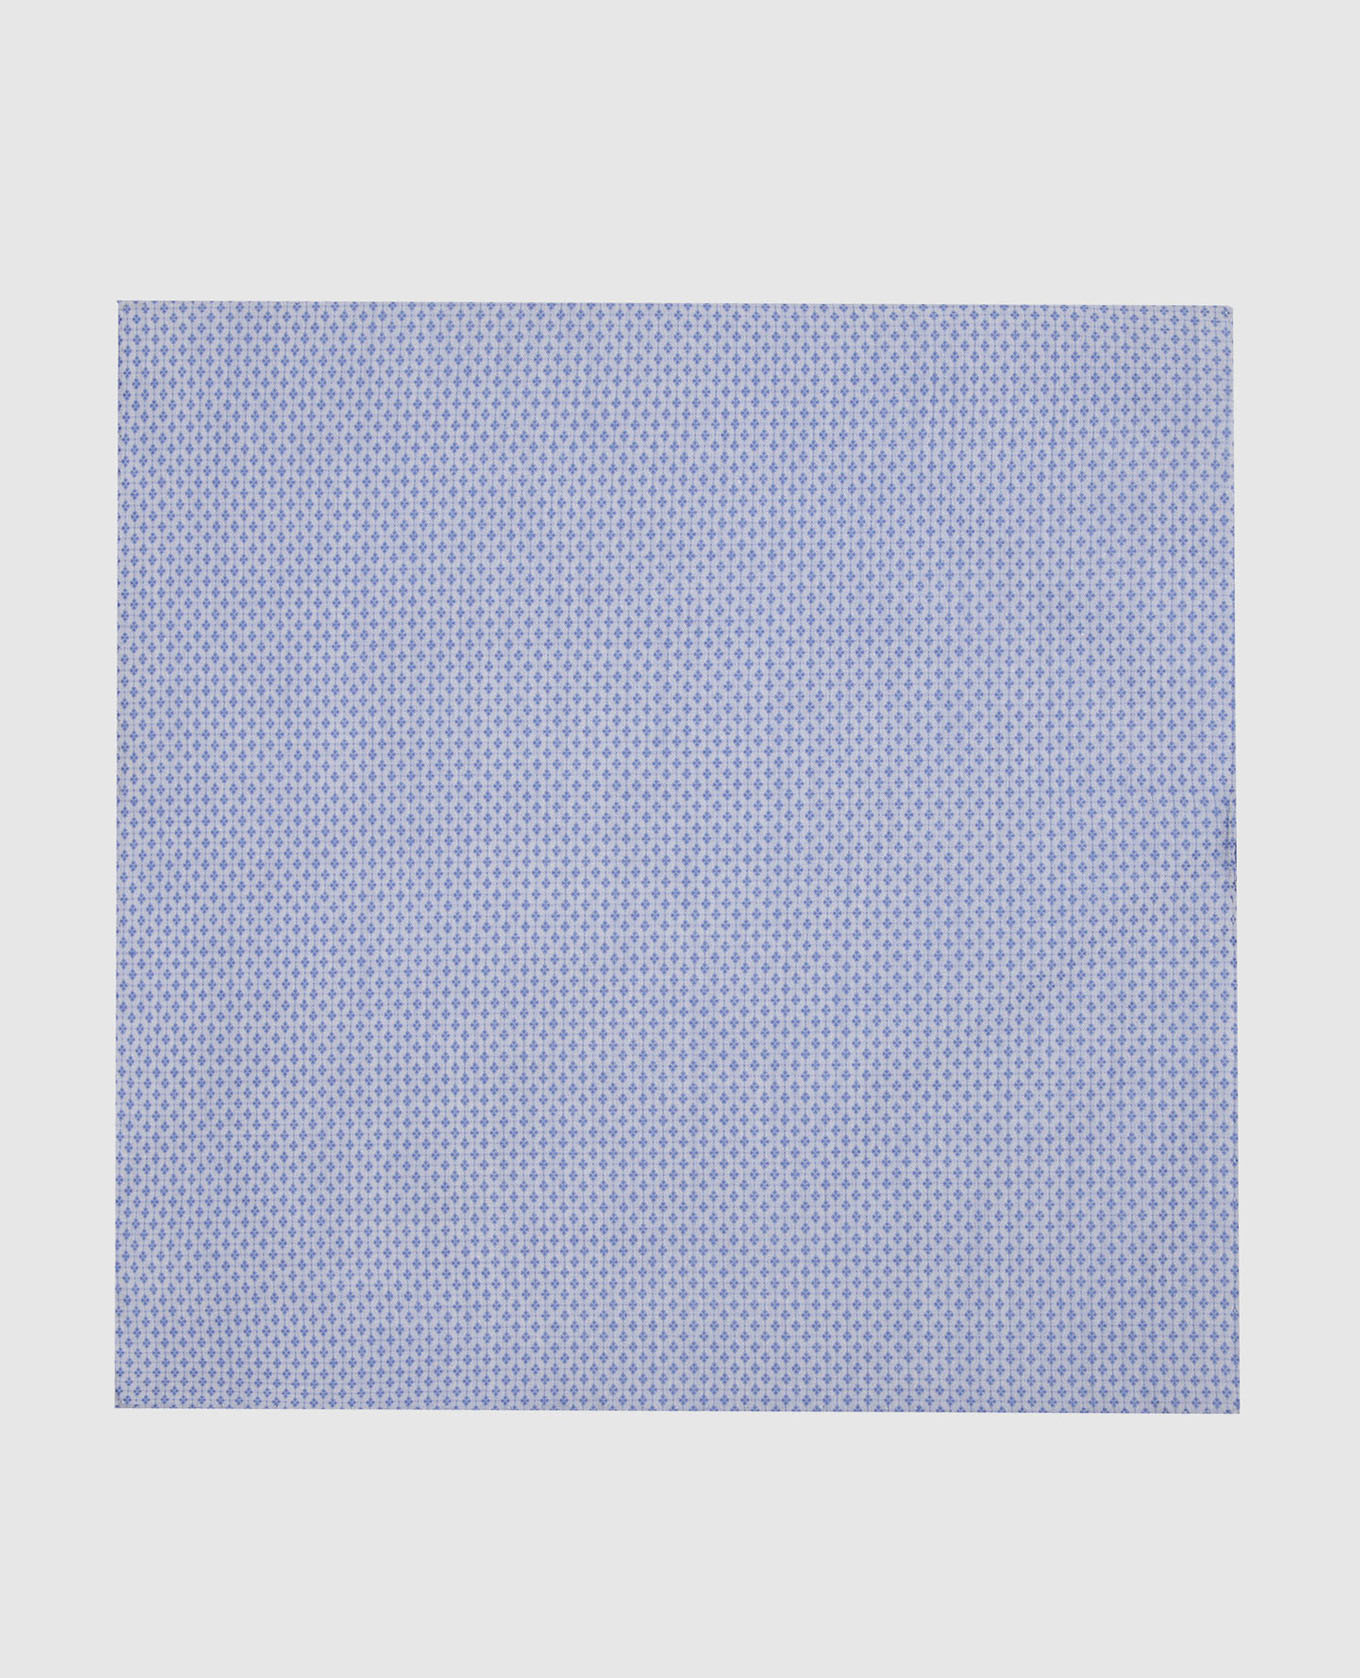 Children's blue jacquard handkerchief in a pattern